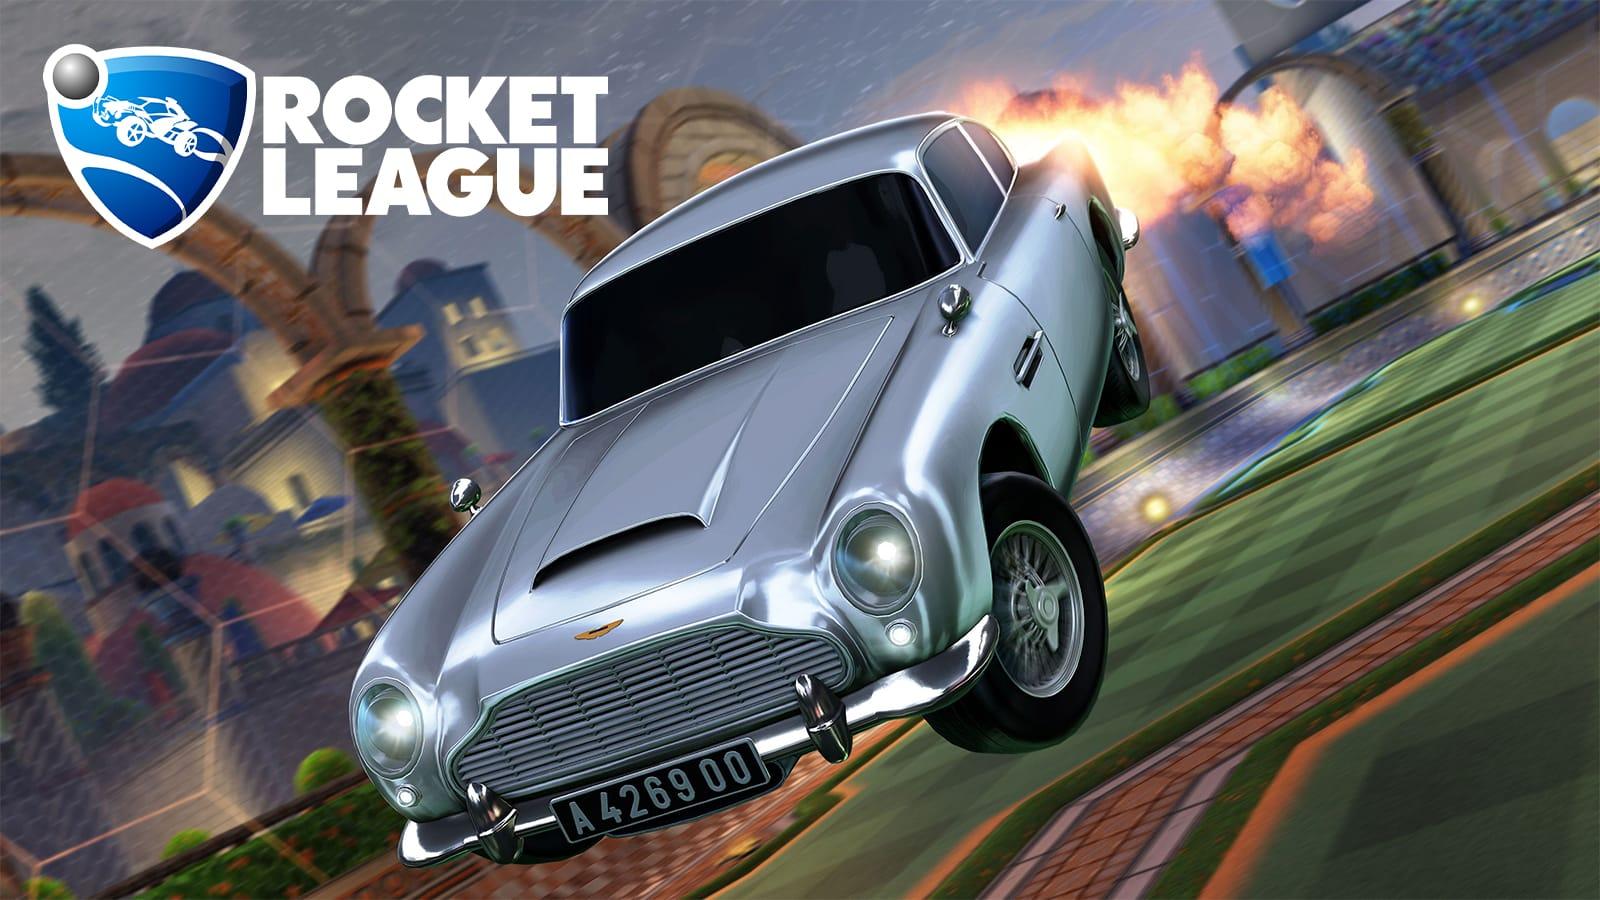 James Bond's iconic Aston Martin is coming to Rocket League - Dexerto